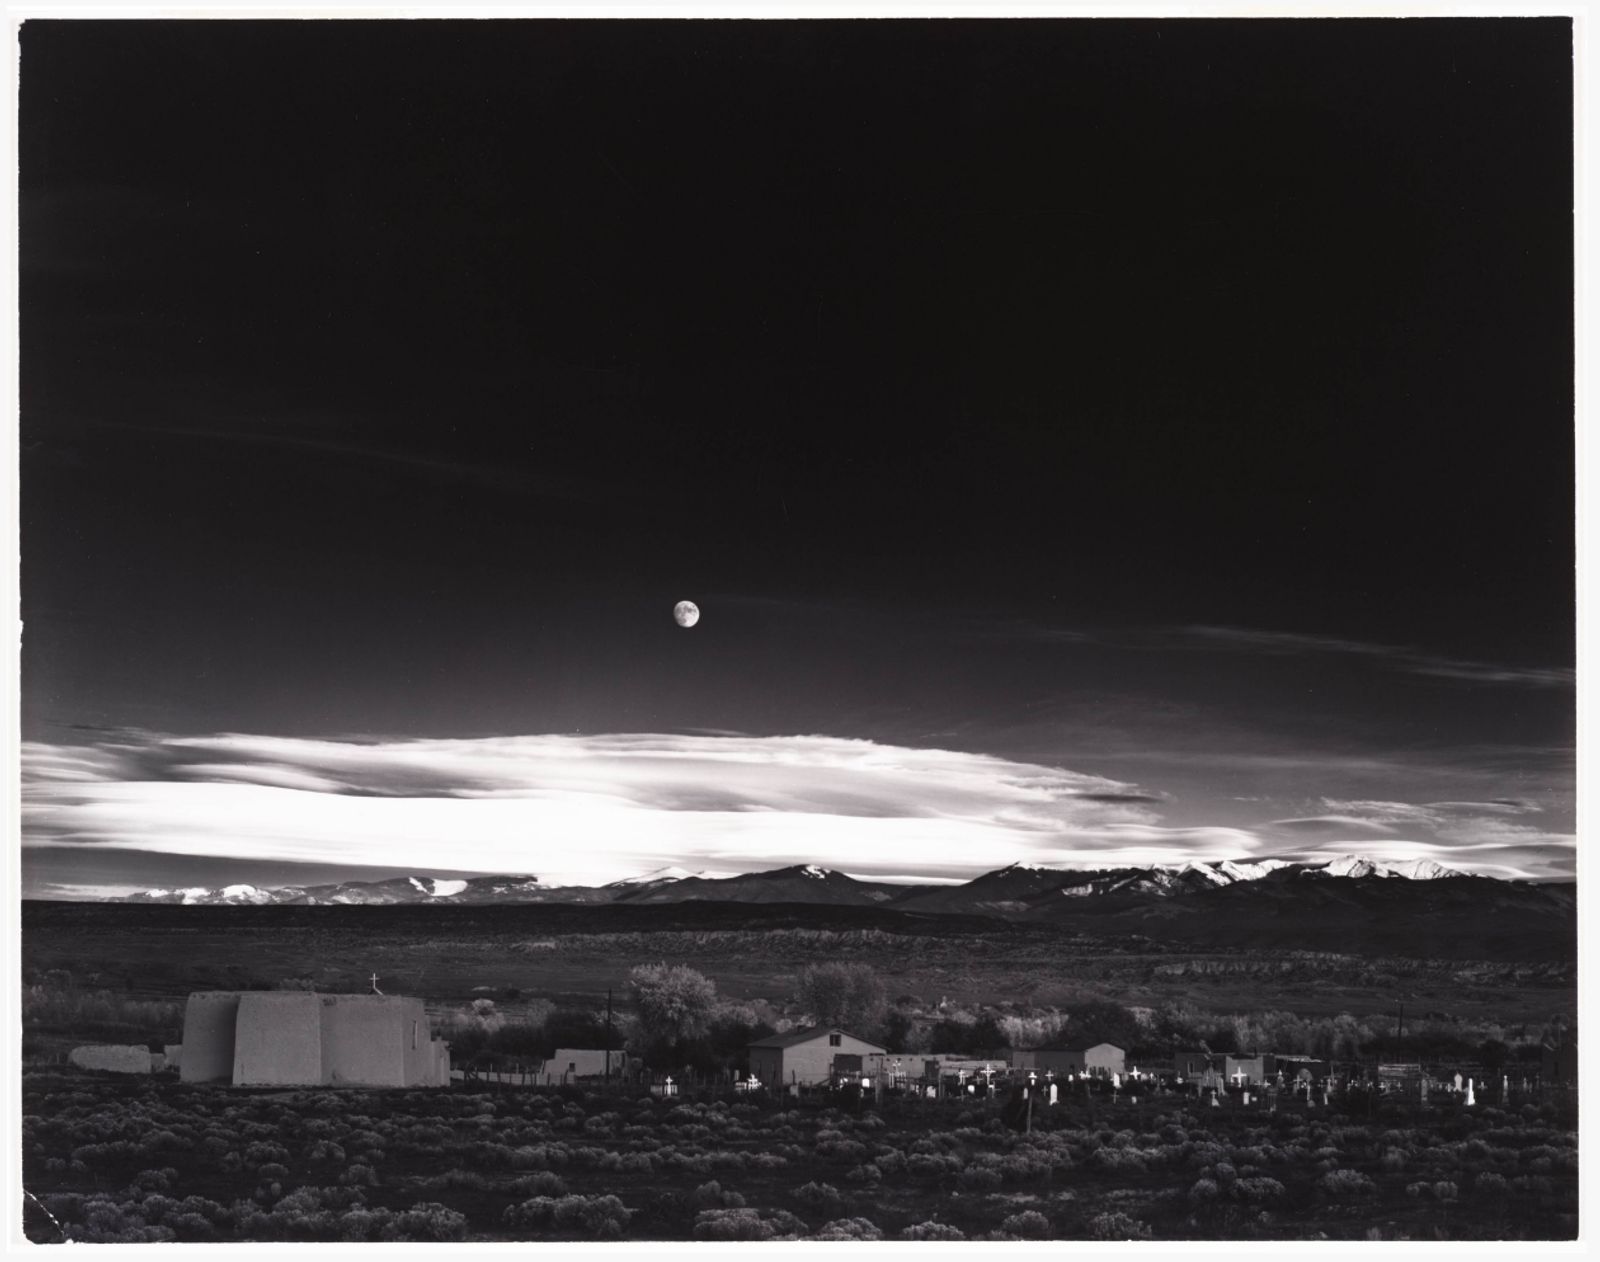 Moonrise, Hernandez, New Mexico © Ansel Adams, Ansel Adams Gallery